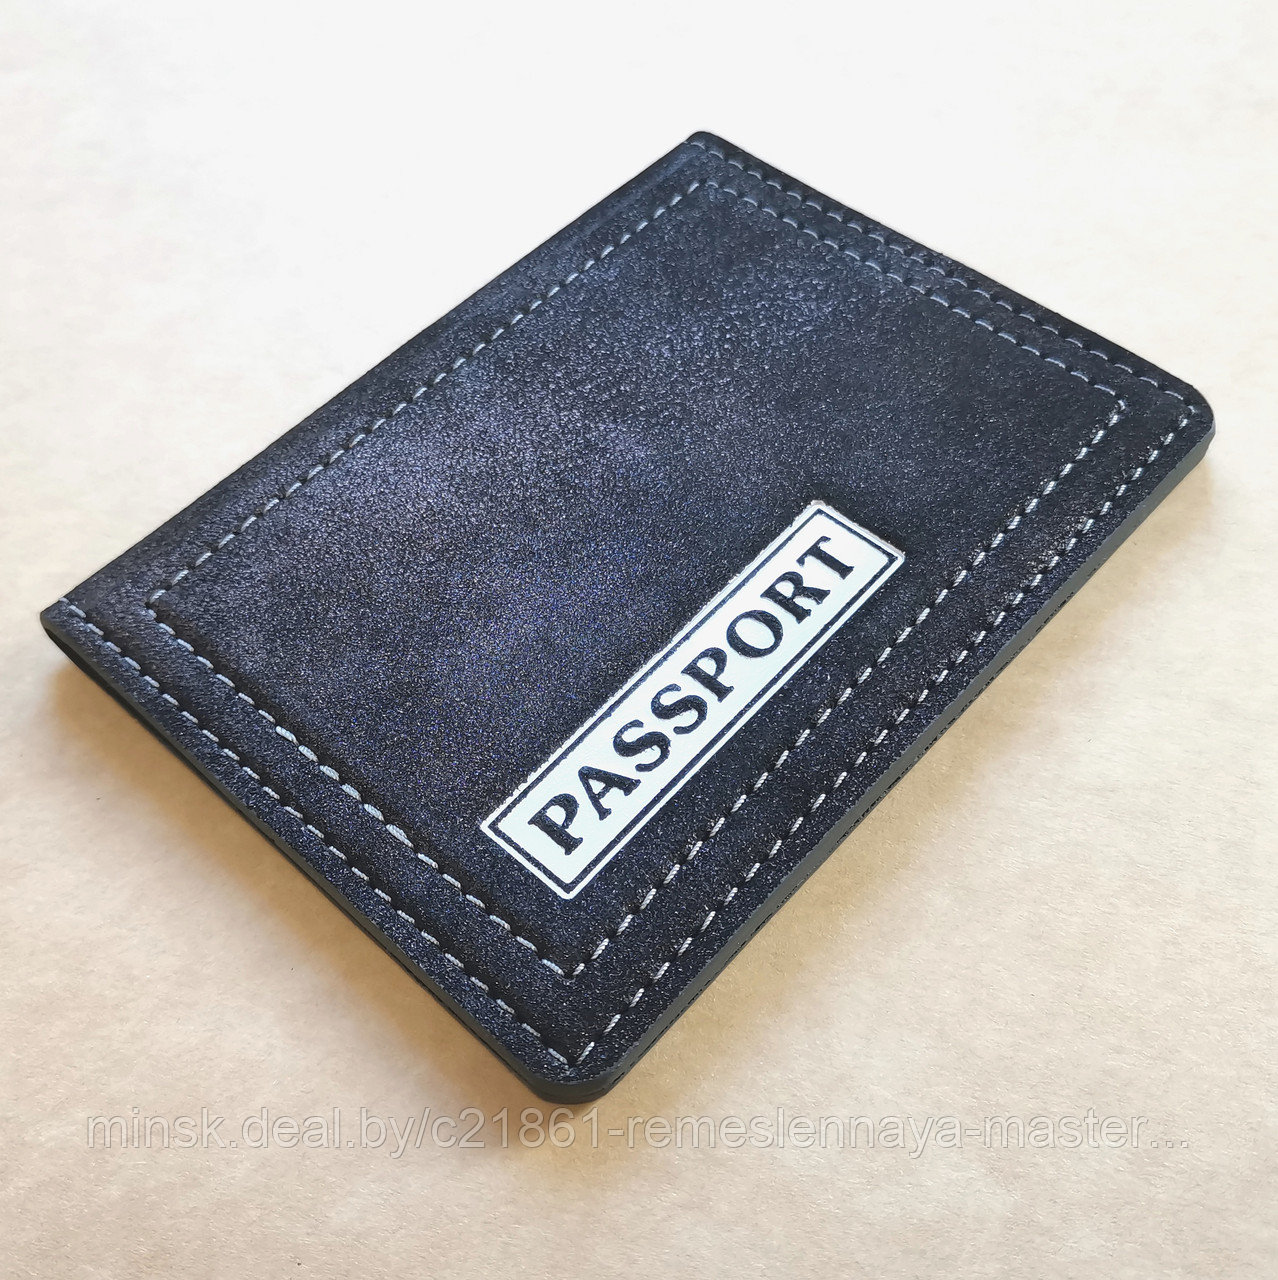 Обложка на паспорт тиснение PASSPORT Арт. 1-43